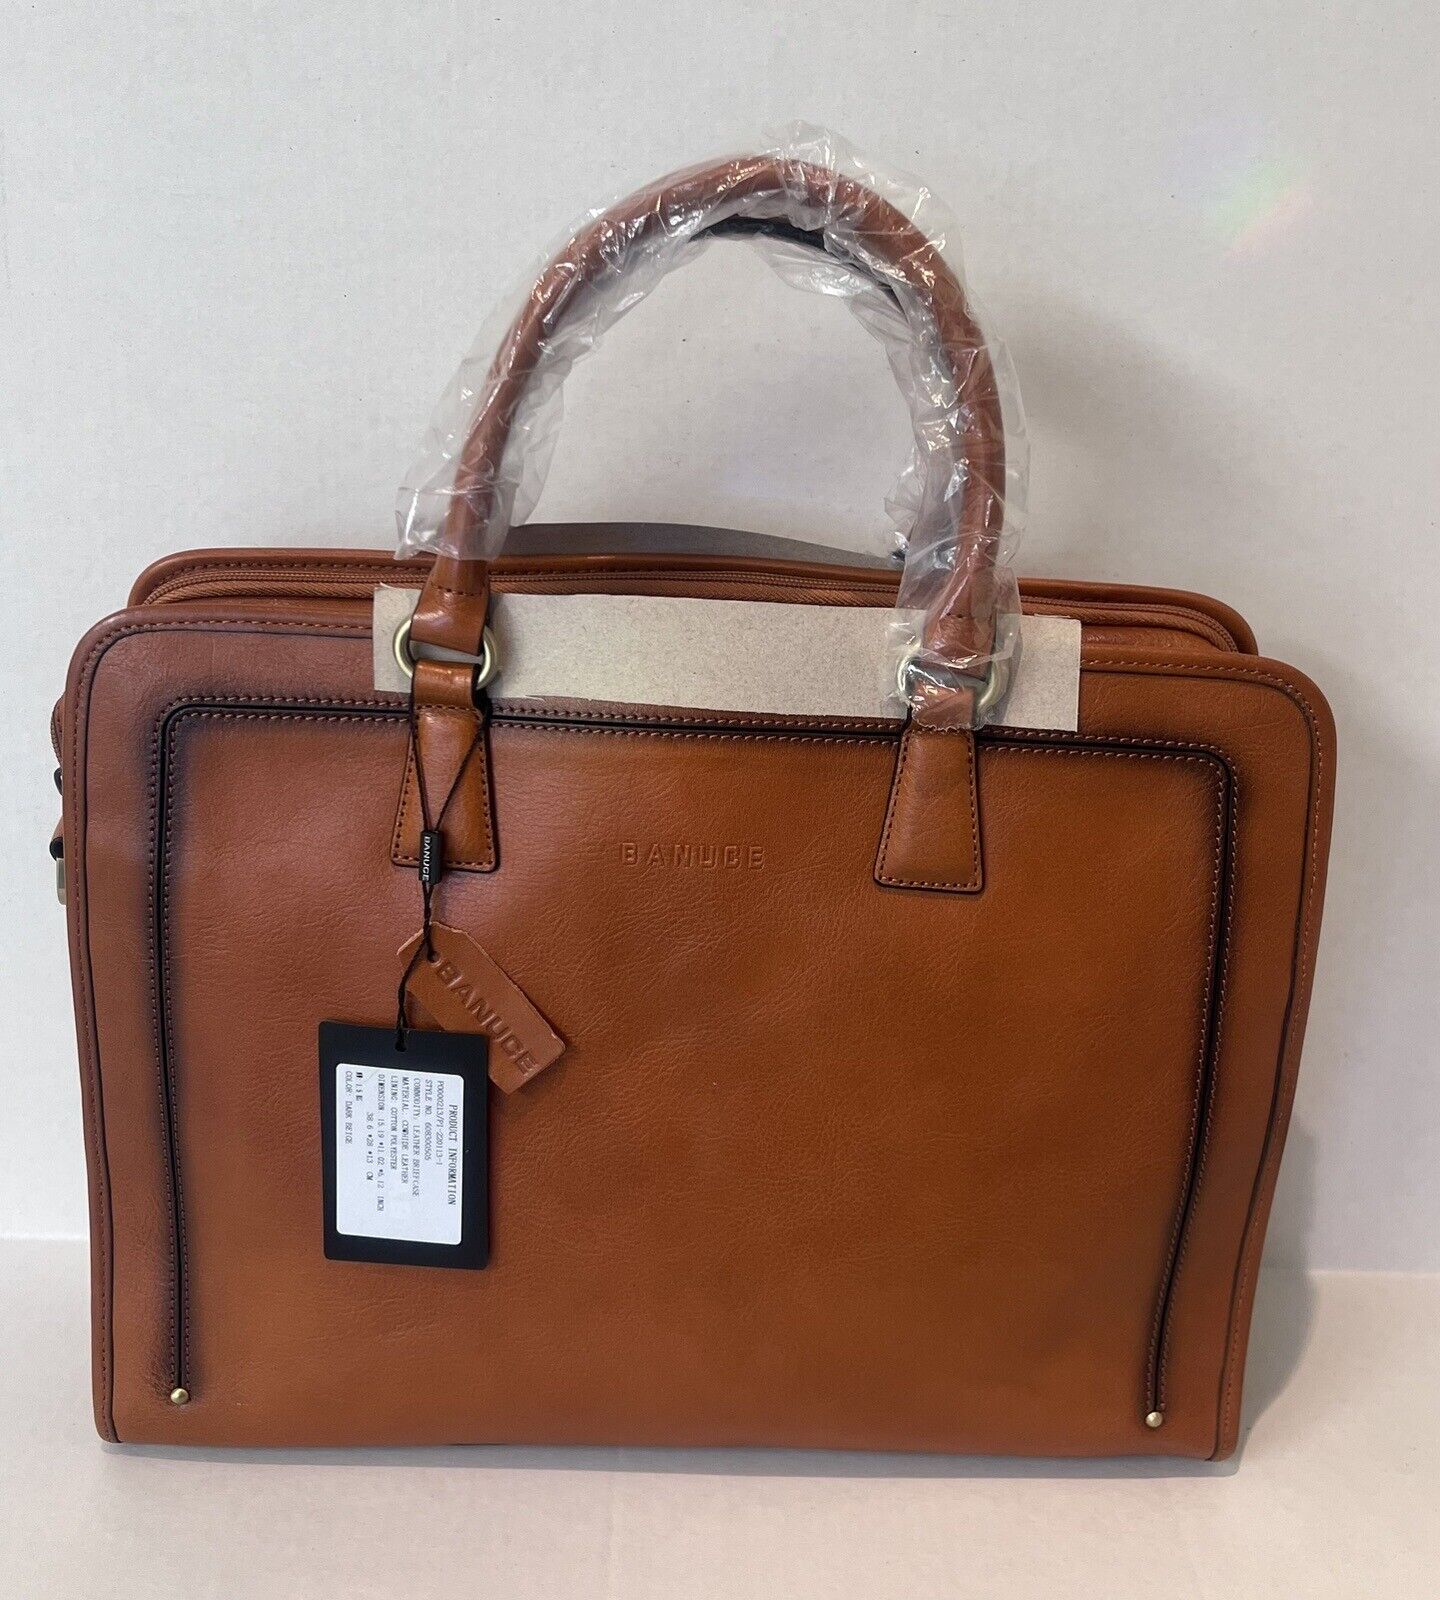 Banuce Full Grain Italian Leather Laptop Travel Messenger shoulder Bag Briefcase